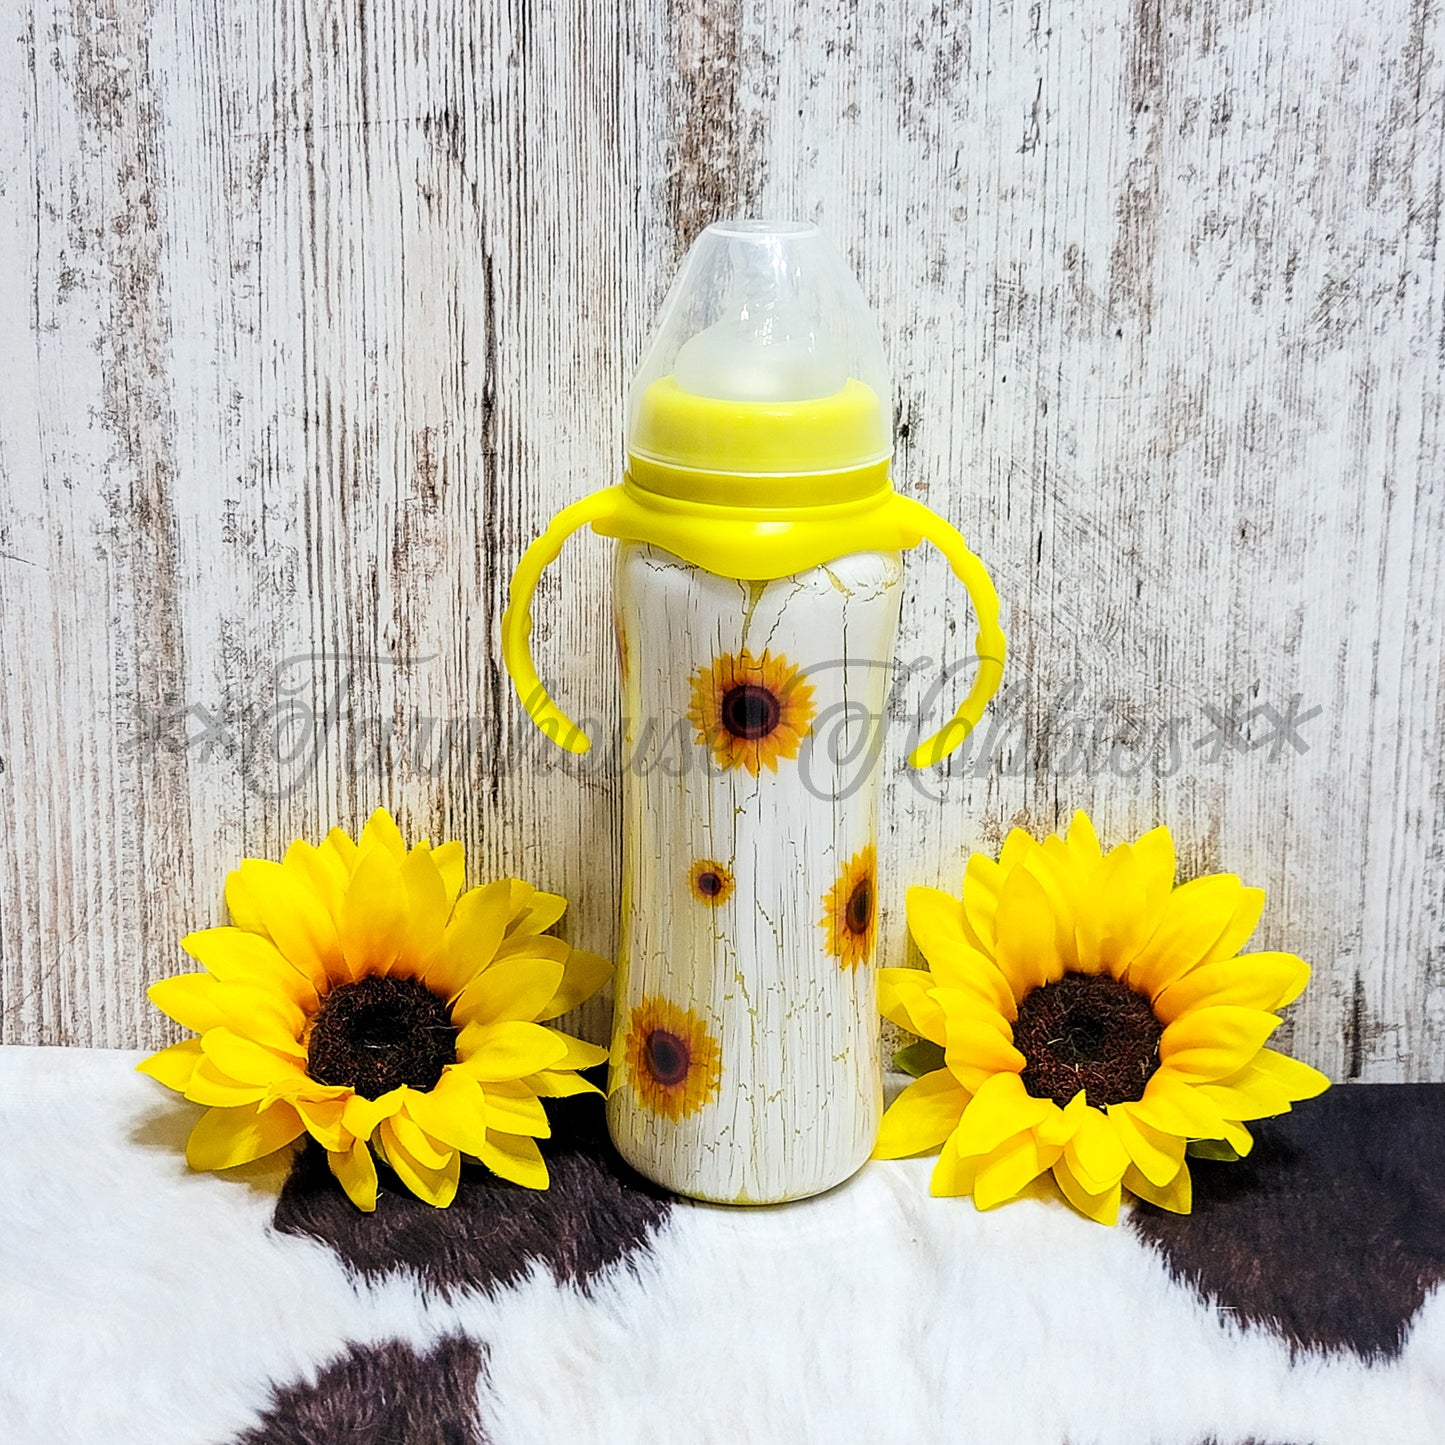 8 oz Baby Bottle Sunflowers RTS Drinkware Farmhouse Hobbies   